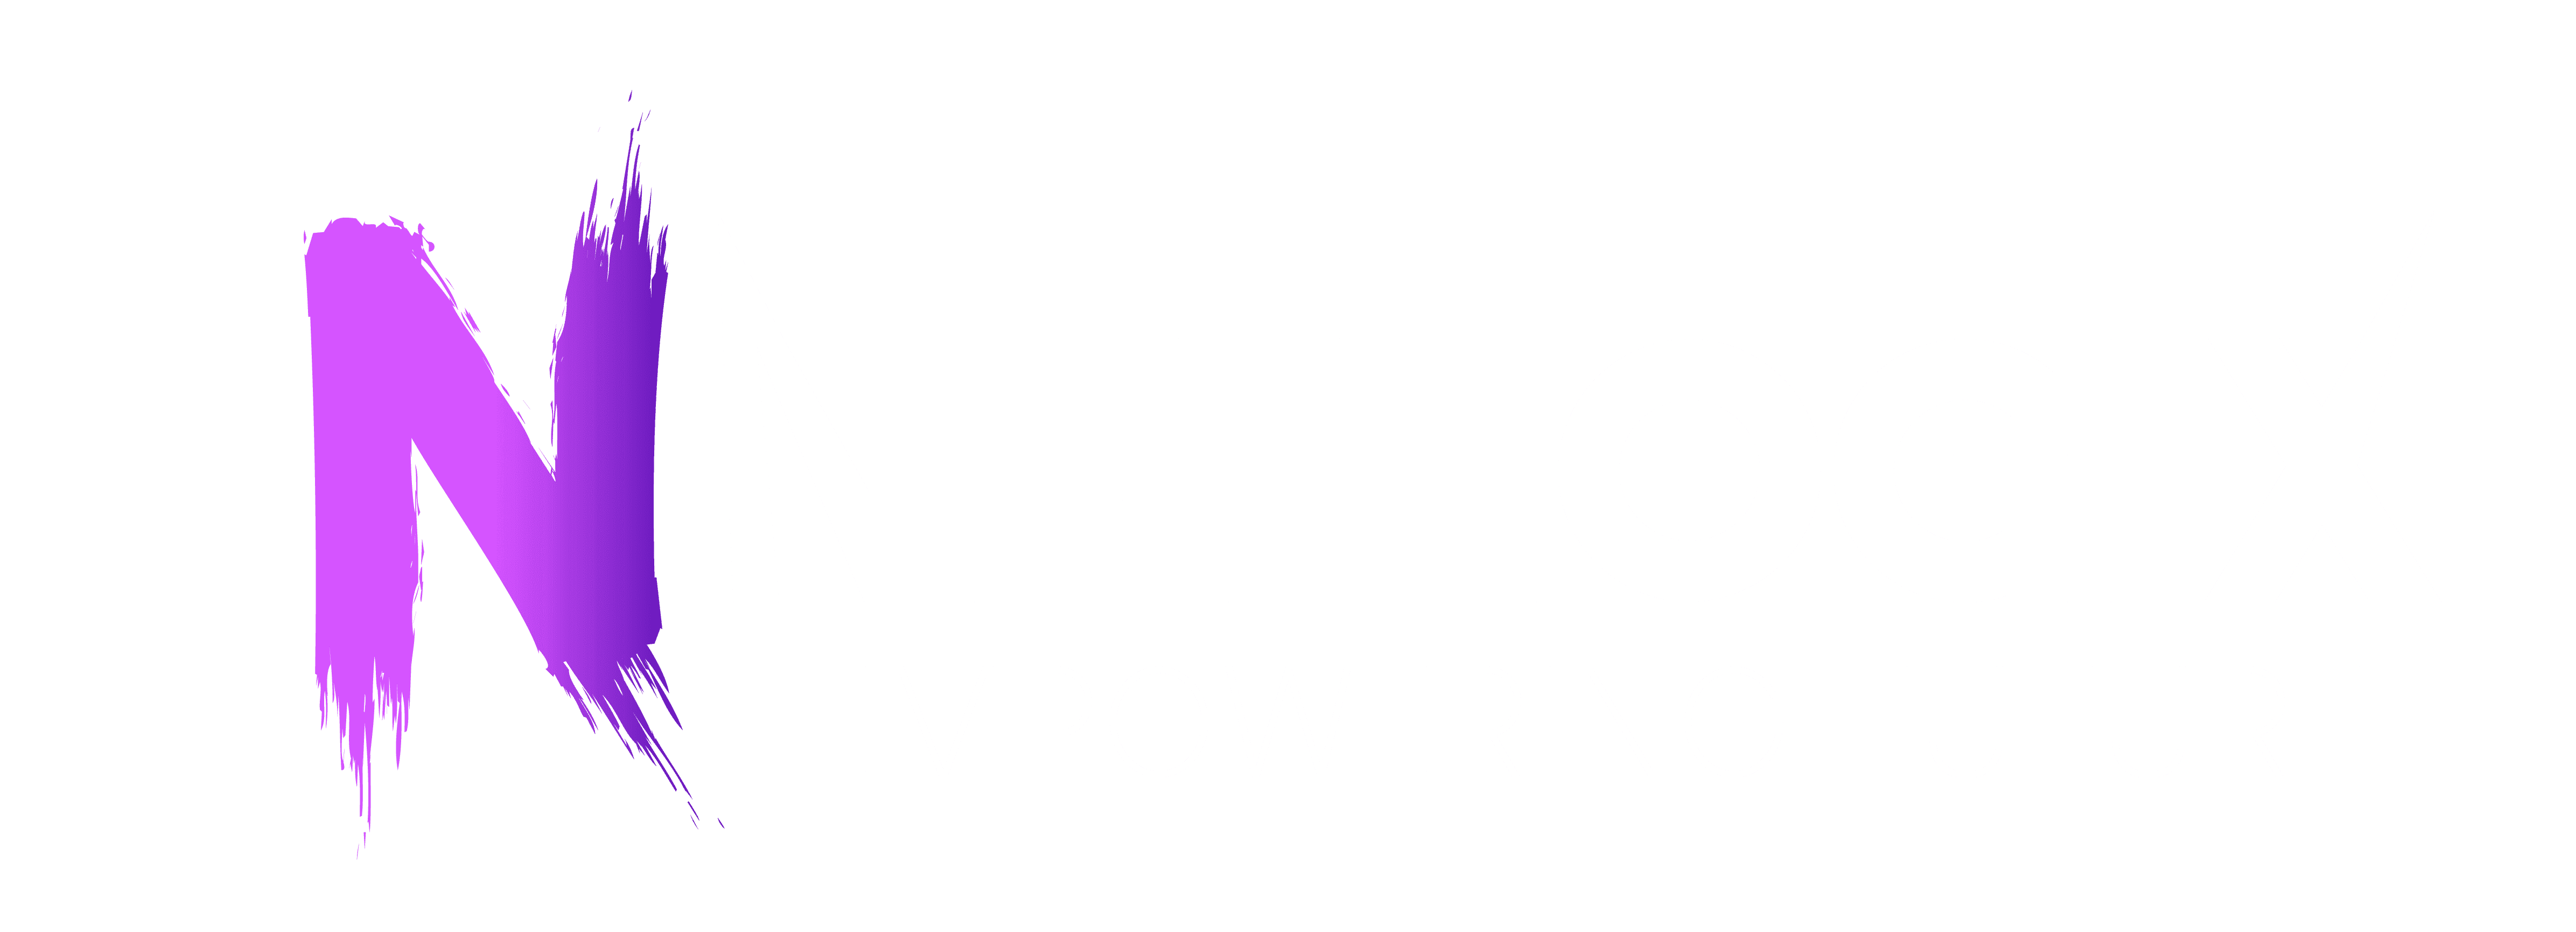 Best IT Services Company in Dubai | Netlogix.com